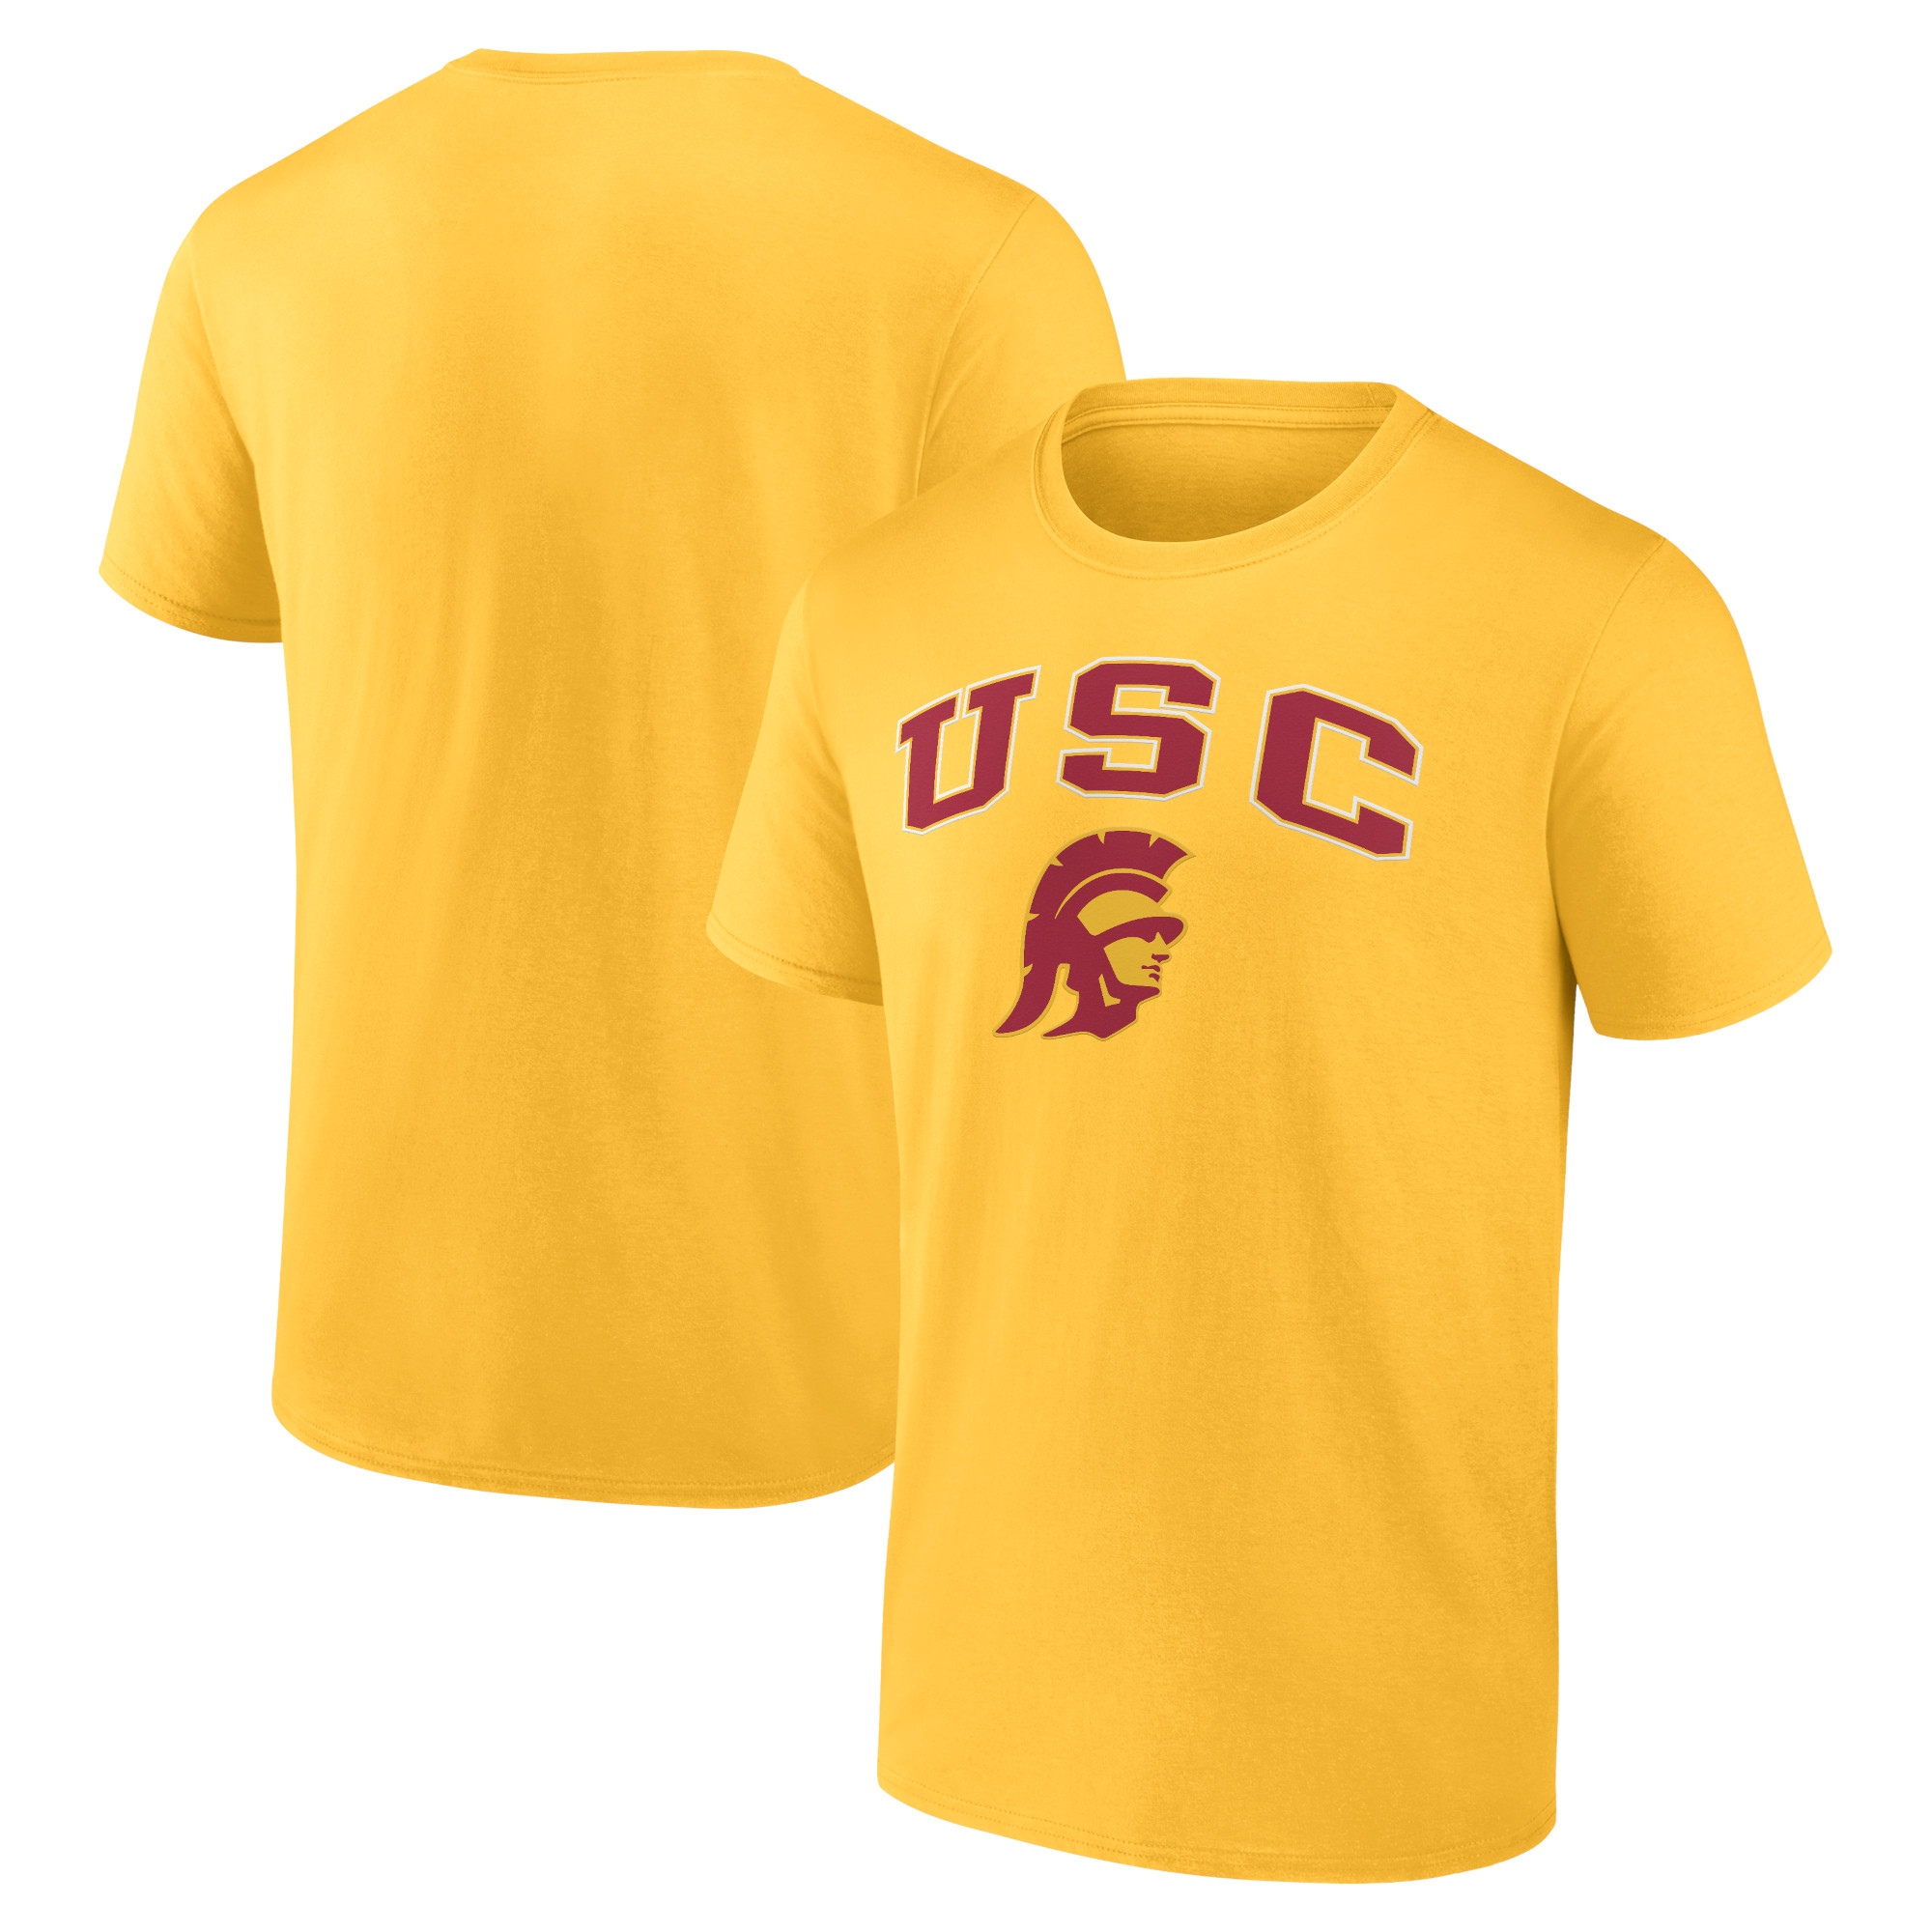 Men's Fanatics Branded Gold USC Trojans Campus T-Shirt - image 1 of 3